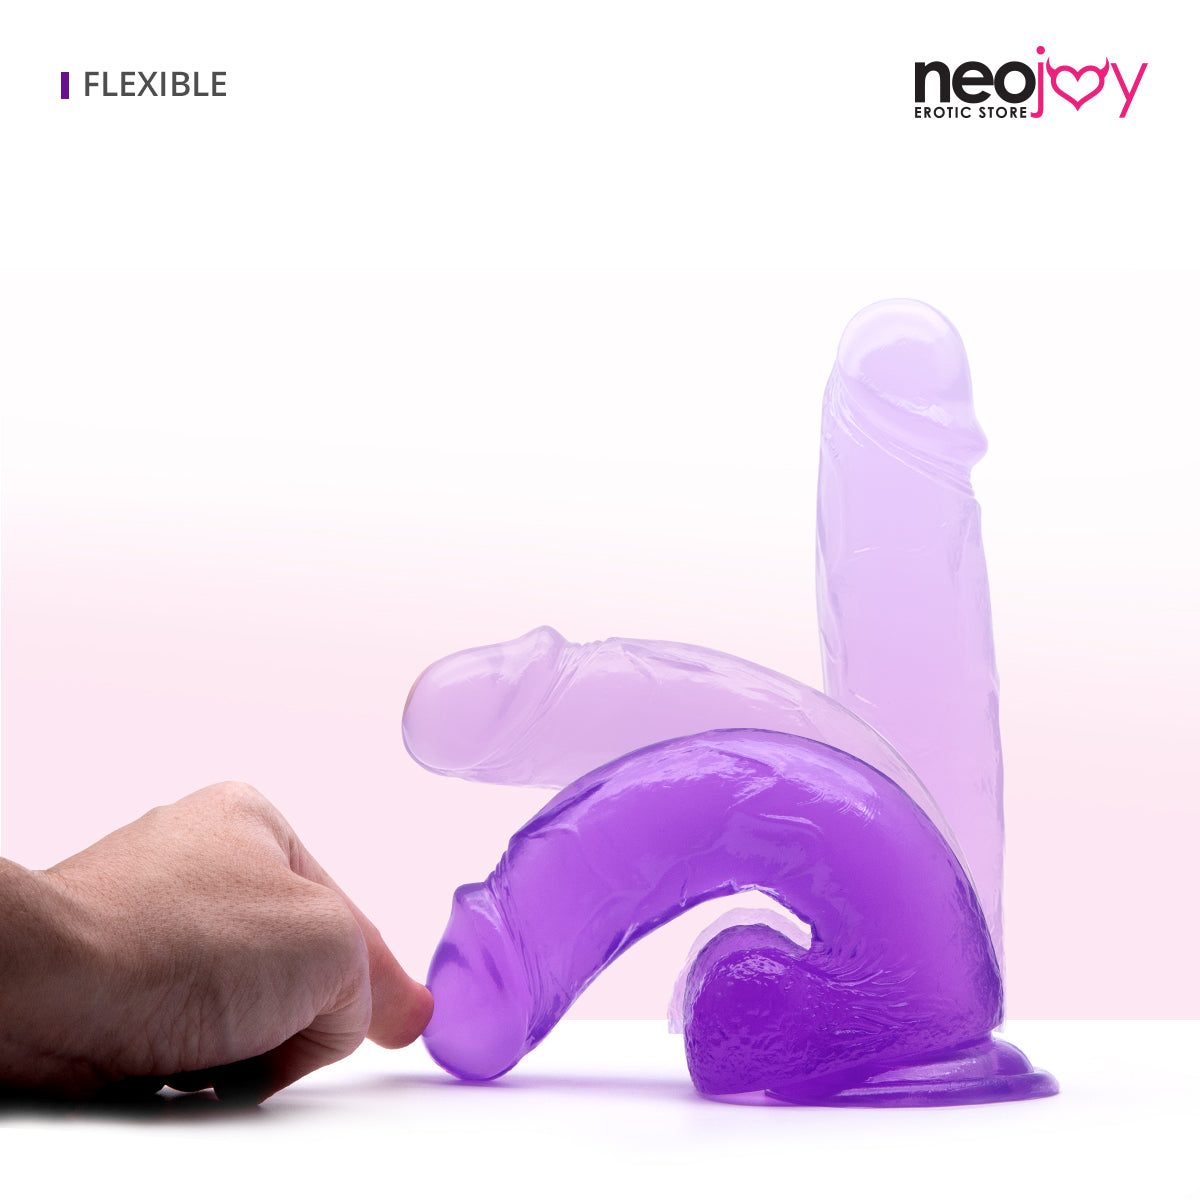 Neojoy 7.87 inch Jelly Dildo - Purple